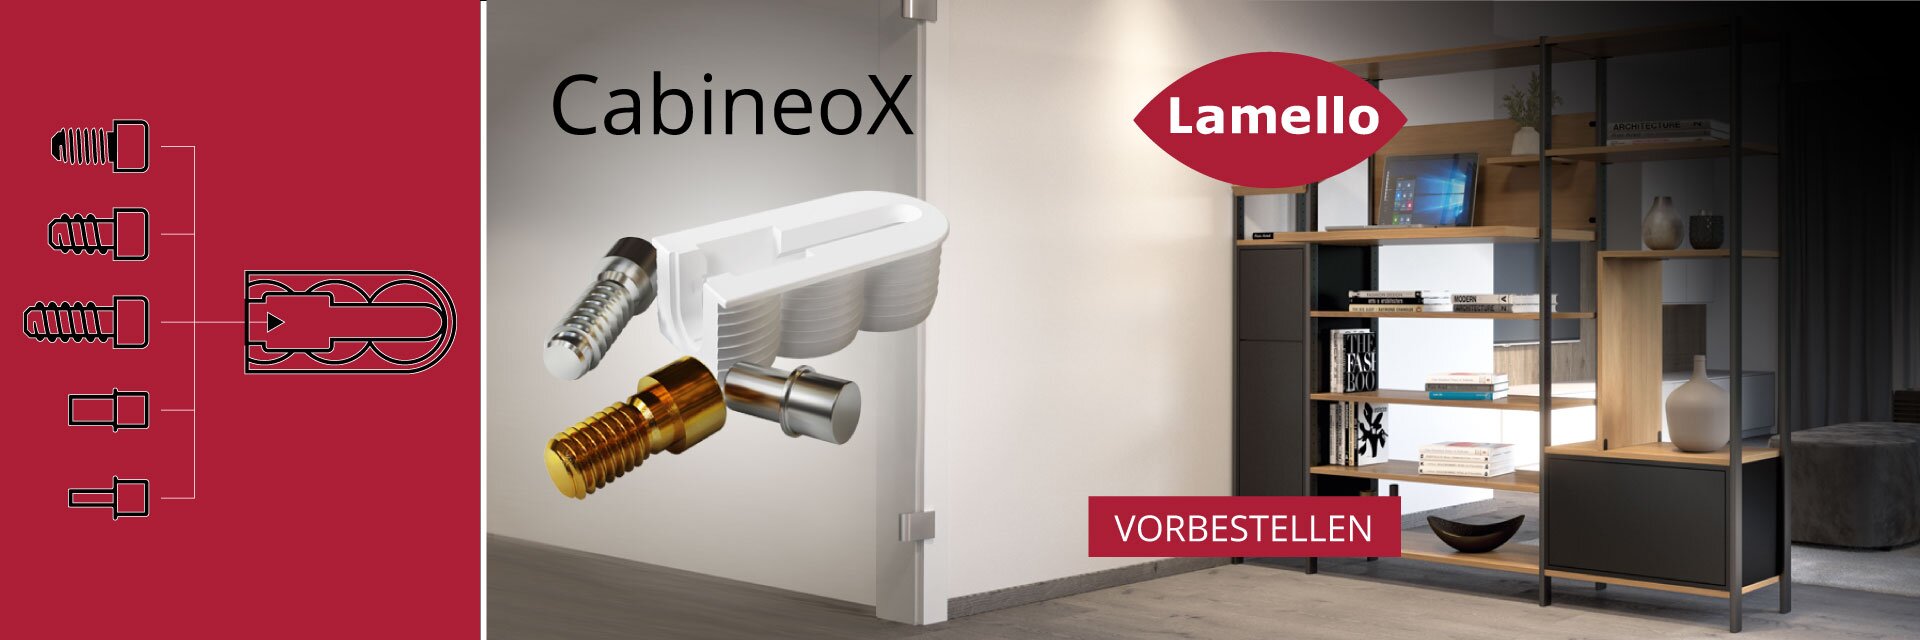 Lamello CabineoX Nesting connector